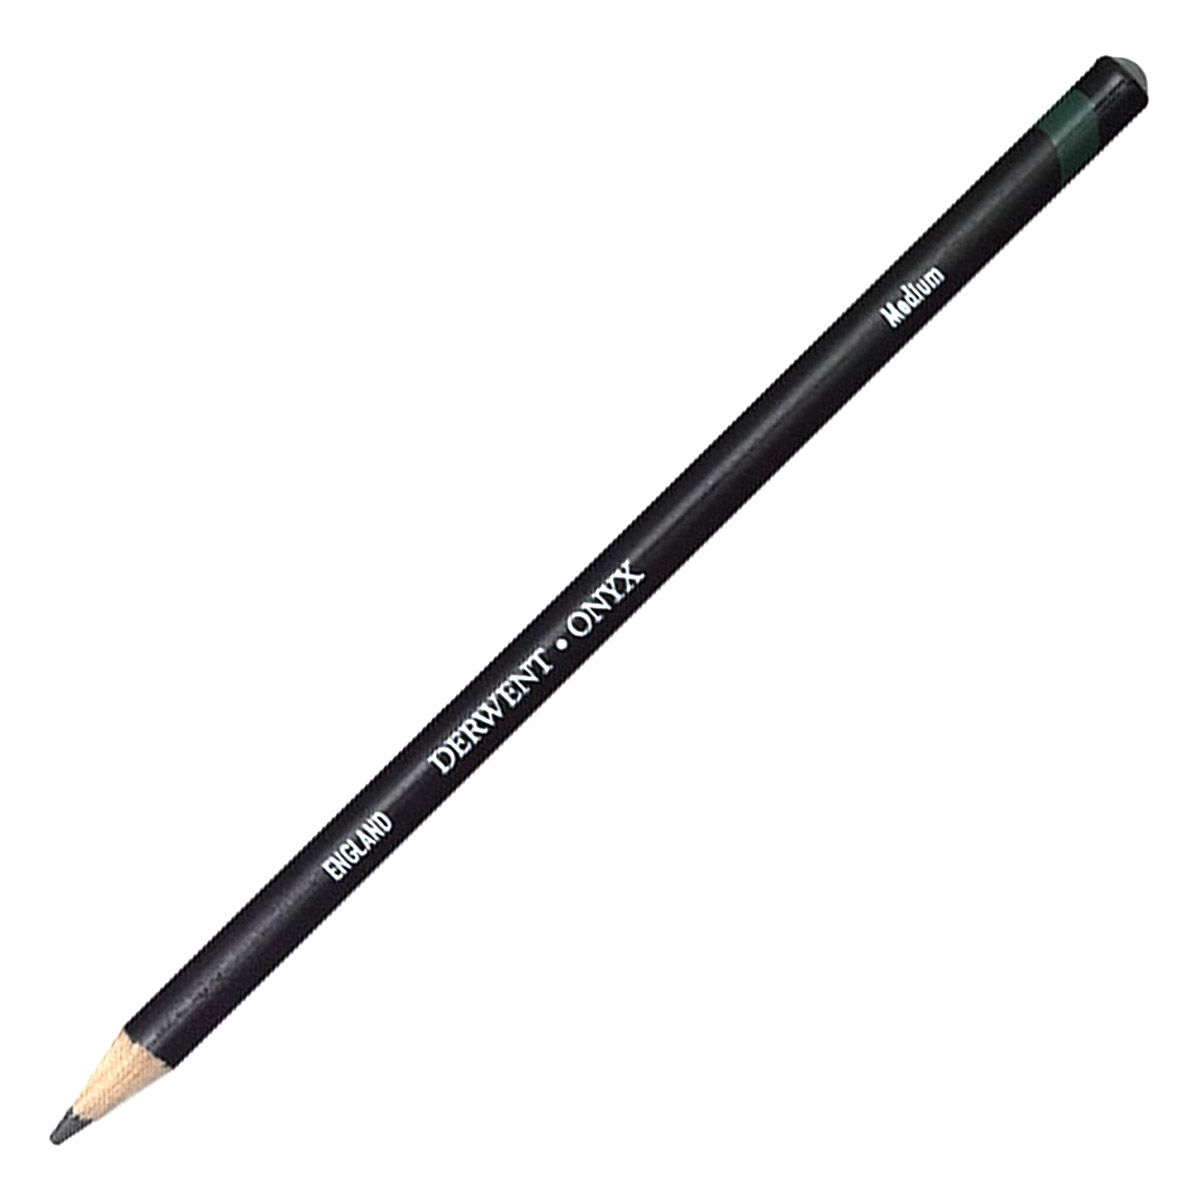 Derwent Onyx Pencil - Medium